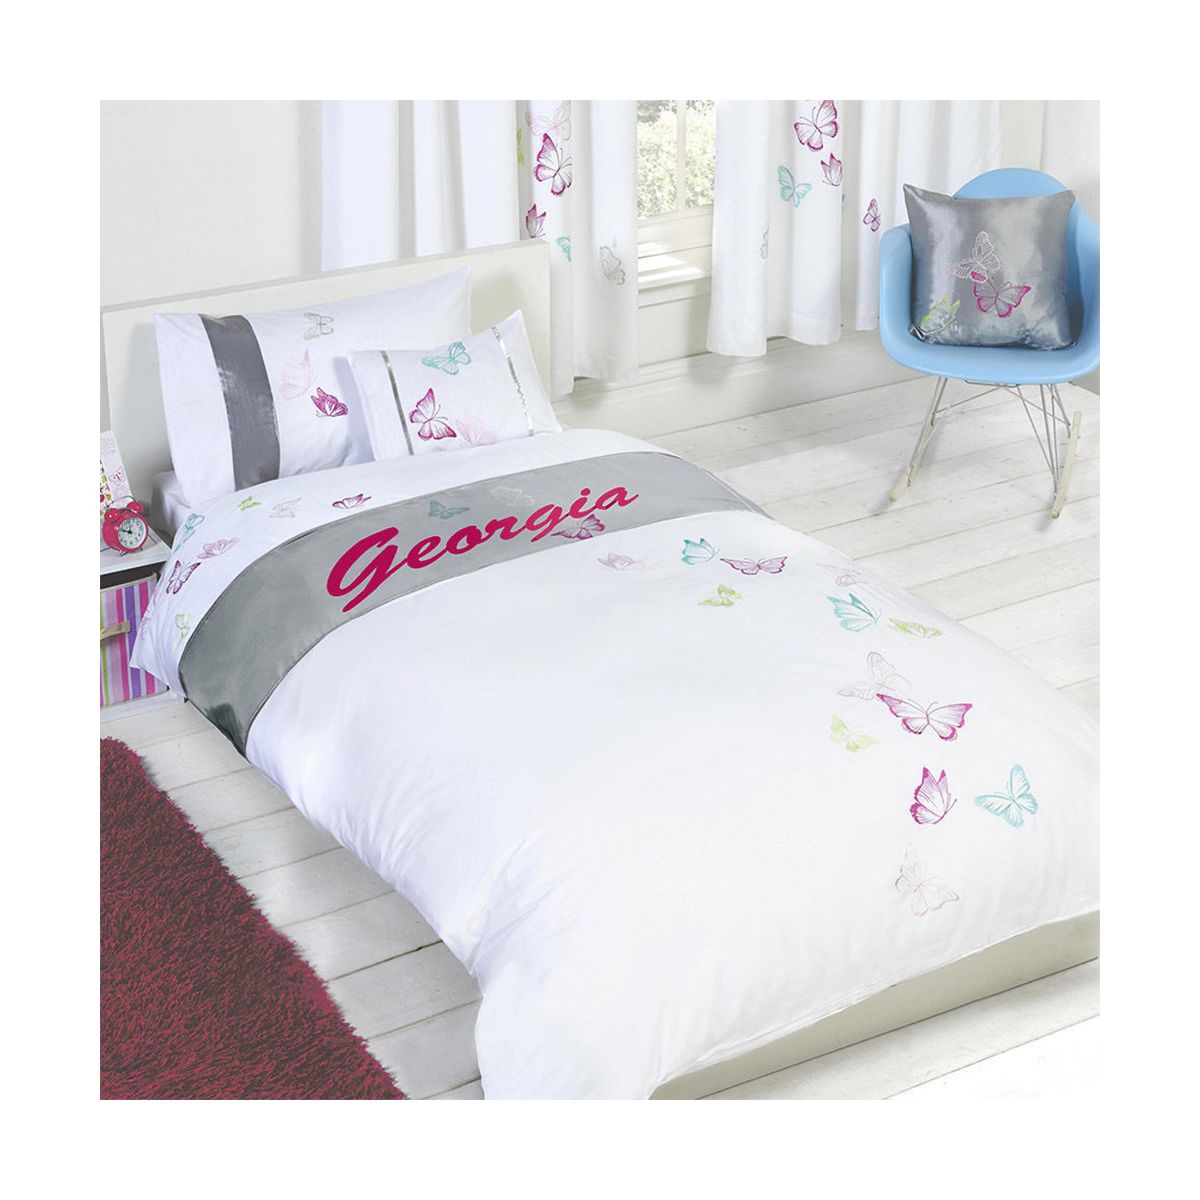 Tobias Baker Personalised Butterfly Duvet Cover Pillow Case Bedding Set - Georgia, Single